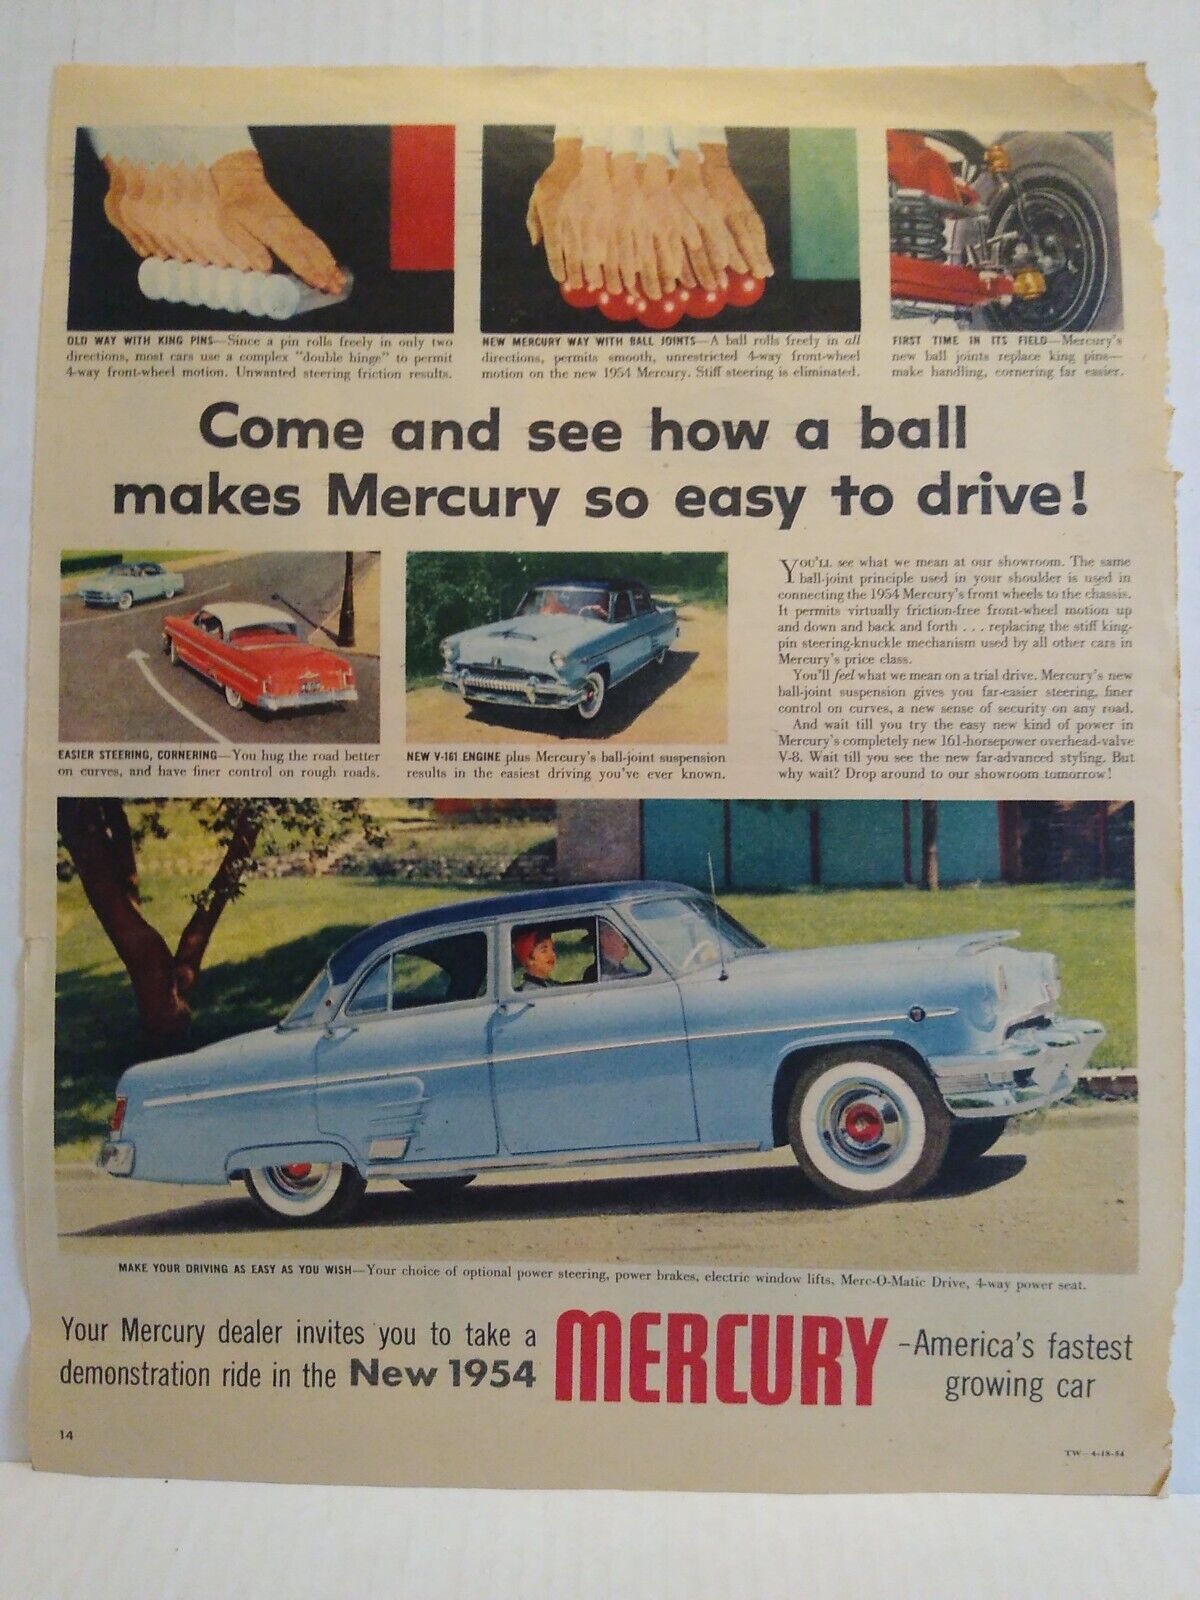 Vintage 1954 MERCURY - MERC-O-MATIC